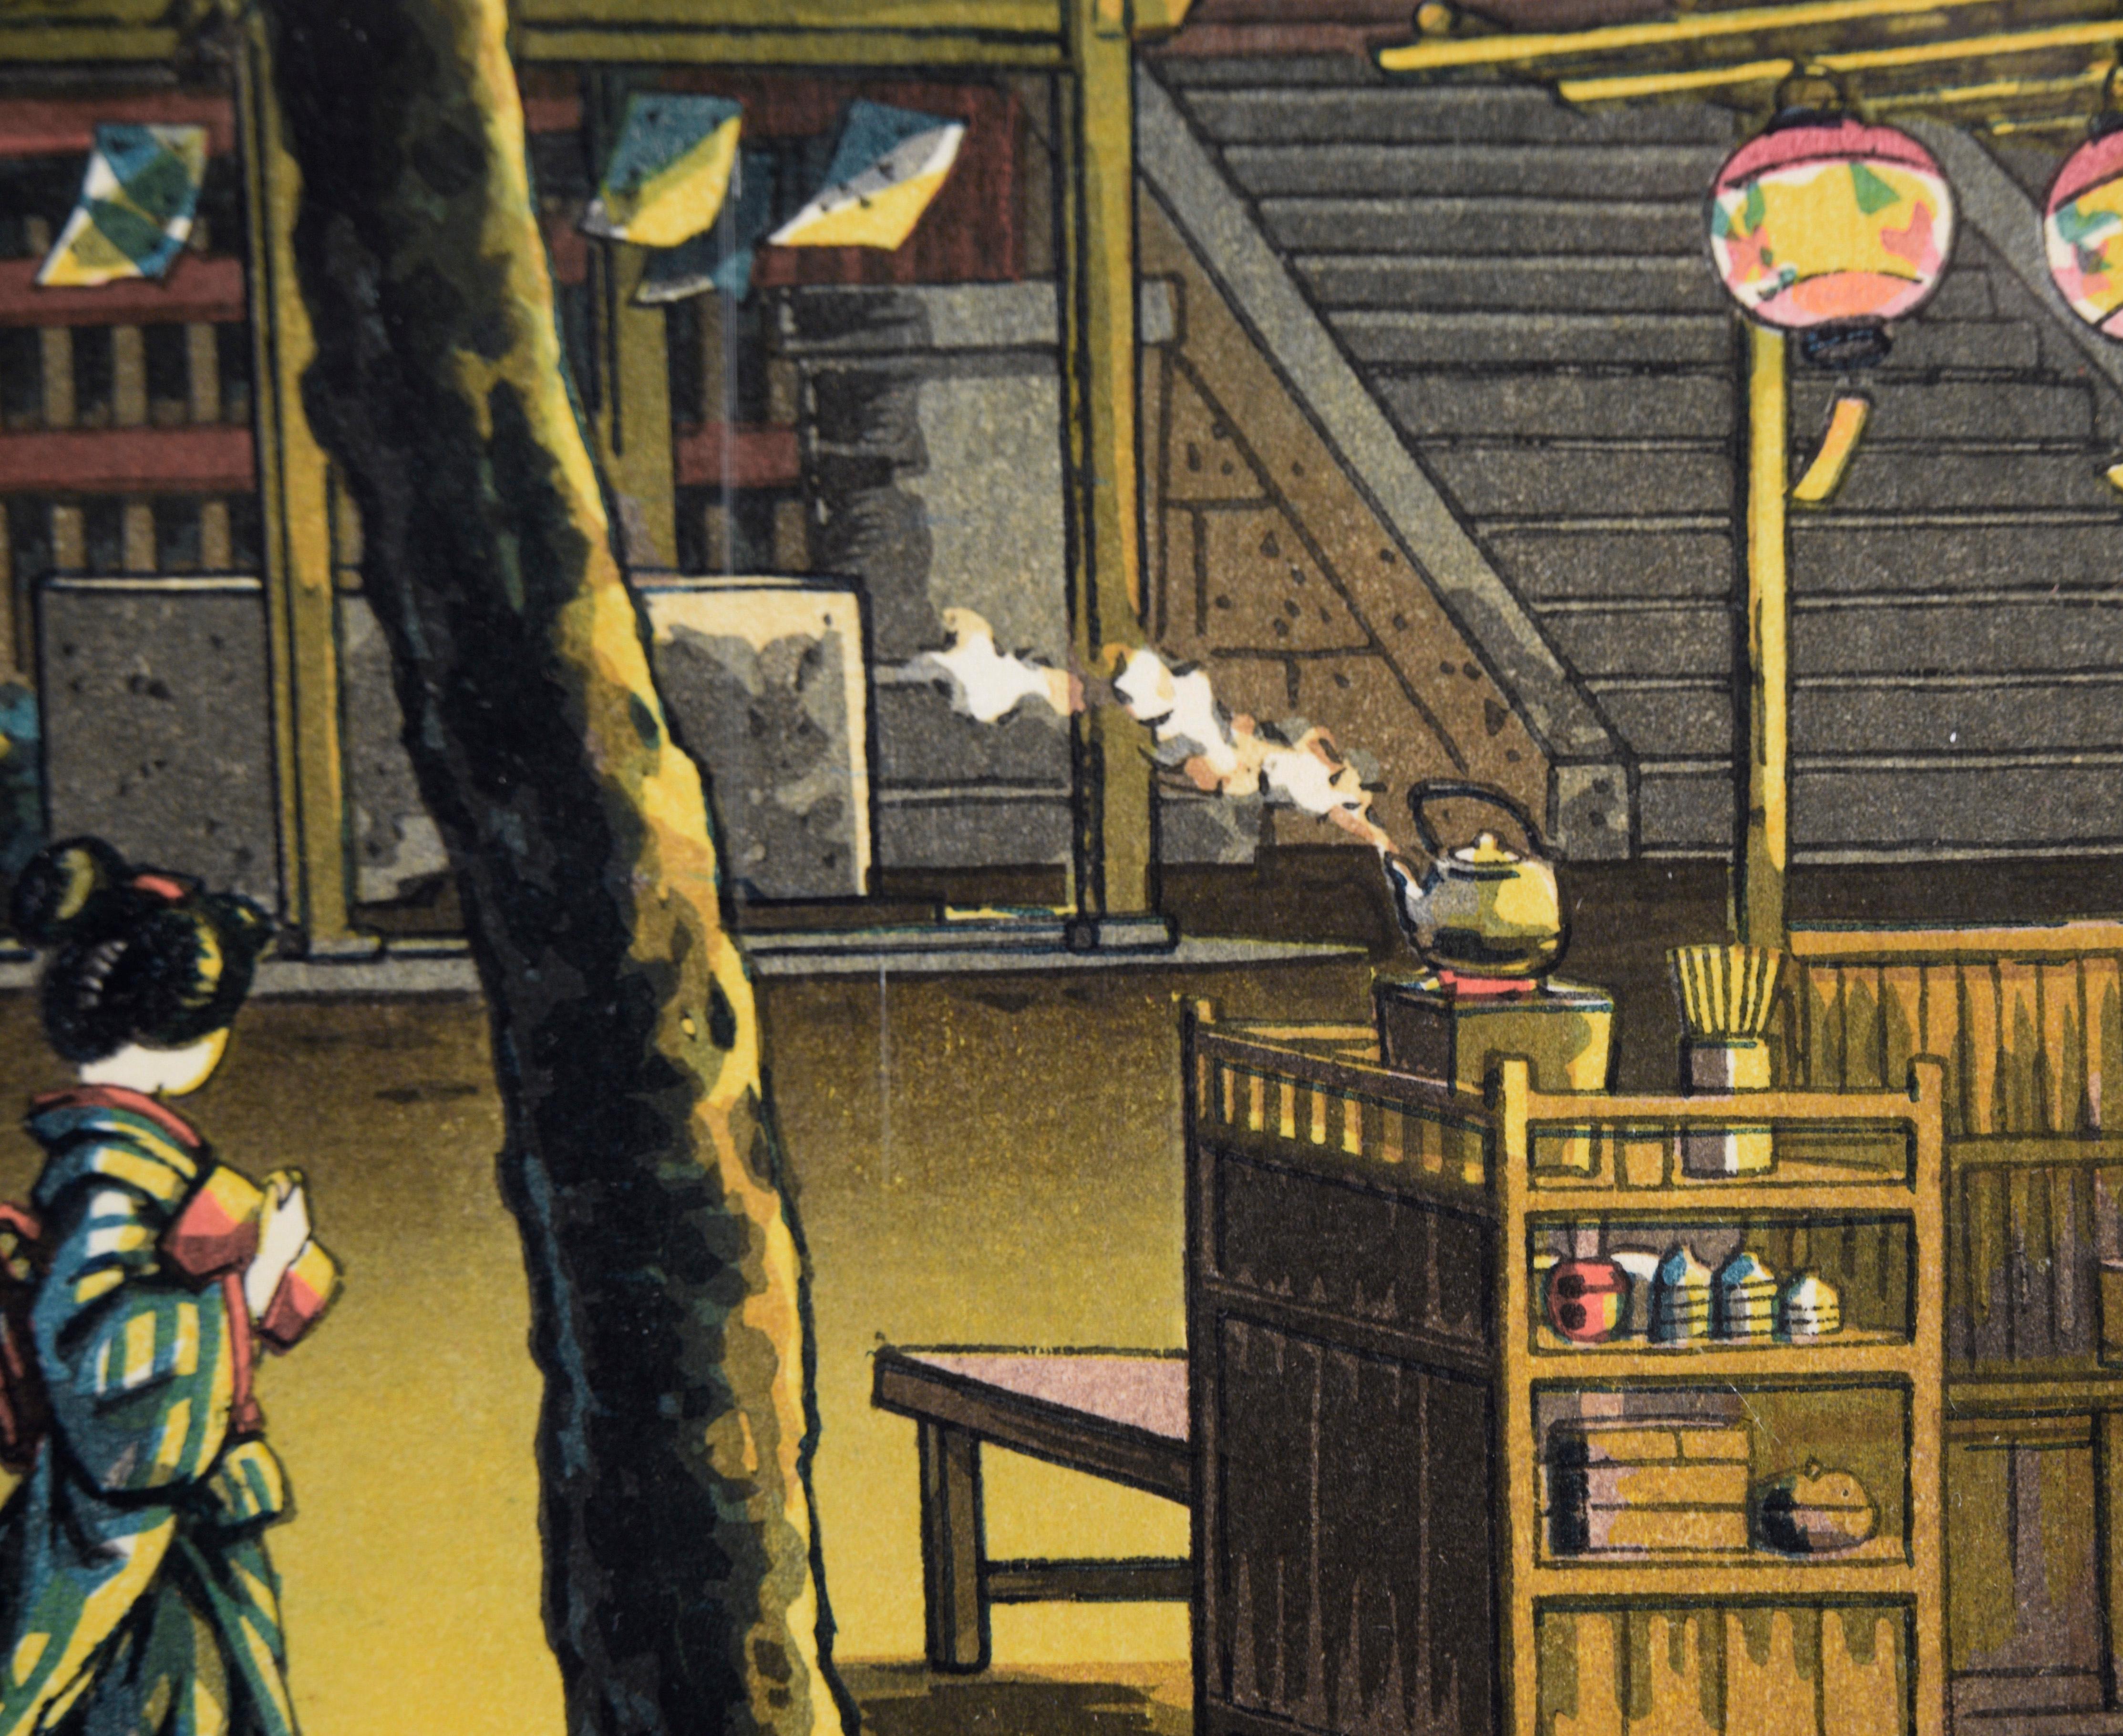 Tea Shop at Kiyomizu (Early Printing) - Nocturnal Woodblock Print on Paper 6